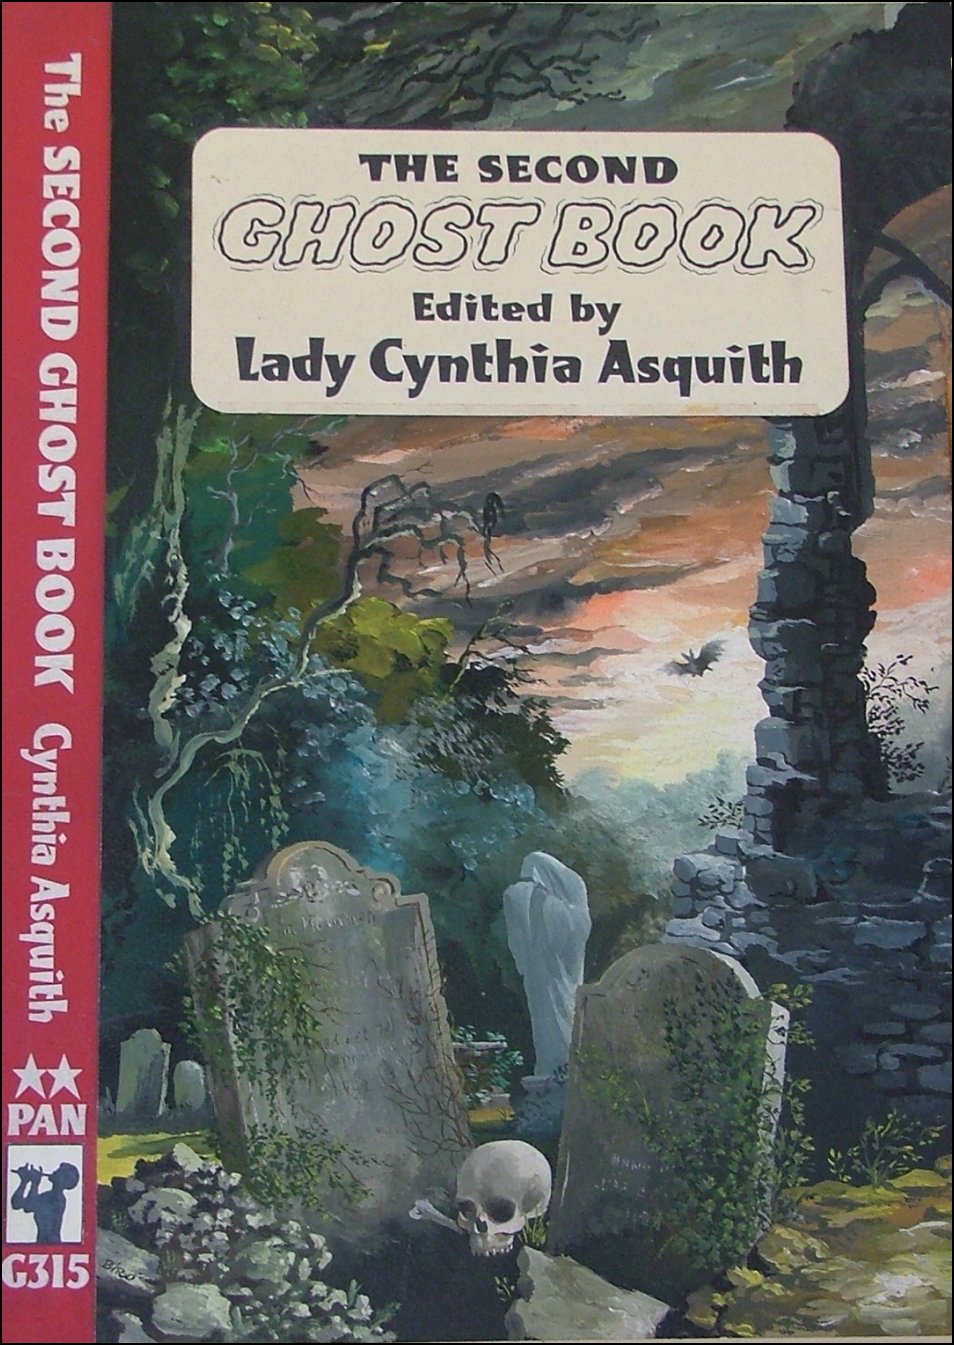 The Second Ghost Book Original artwork